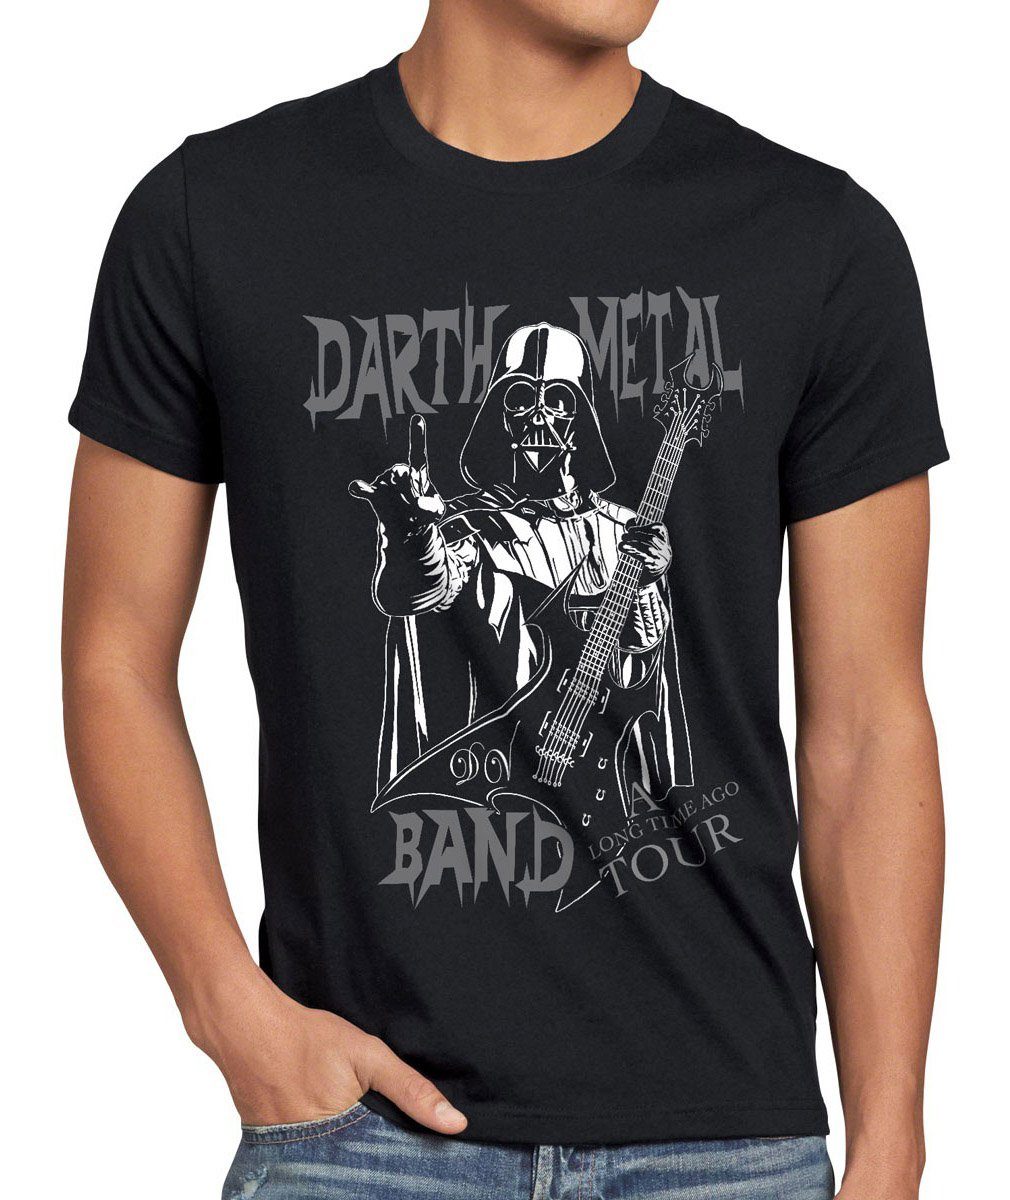 style3 Print-Shirt rock yoda Darth T-Shirt us schwarz skywalker wars Herren luke vader jedi Band Metal star